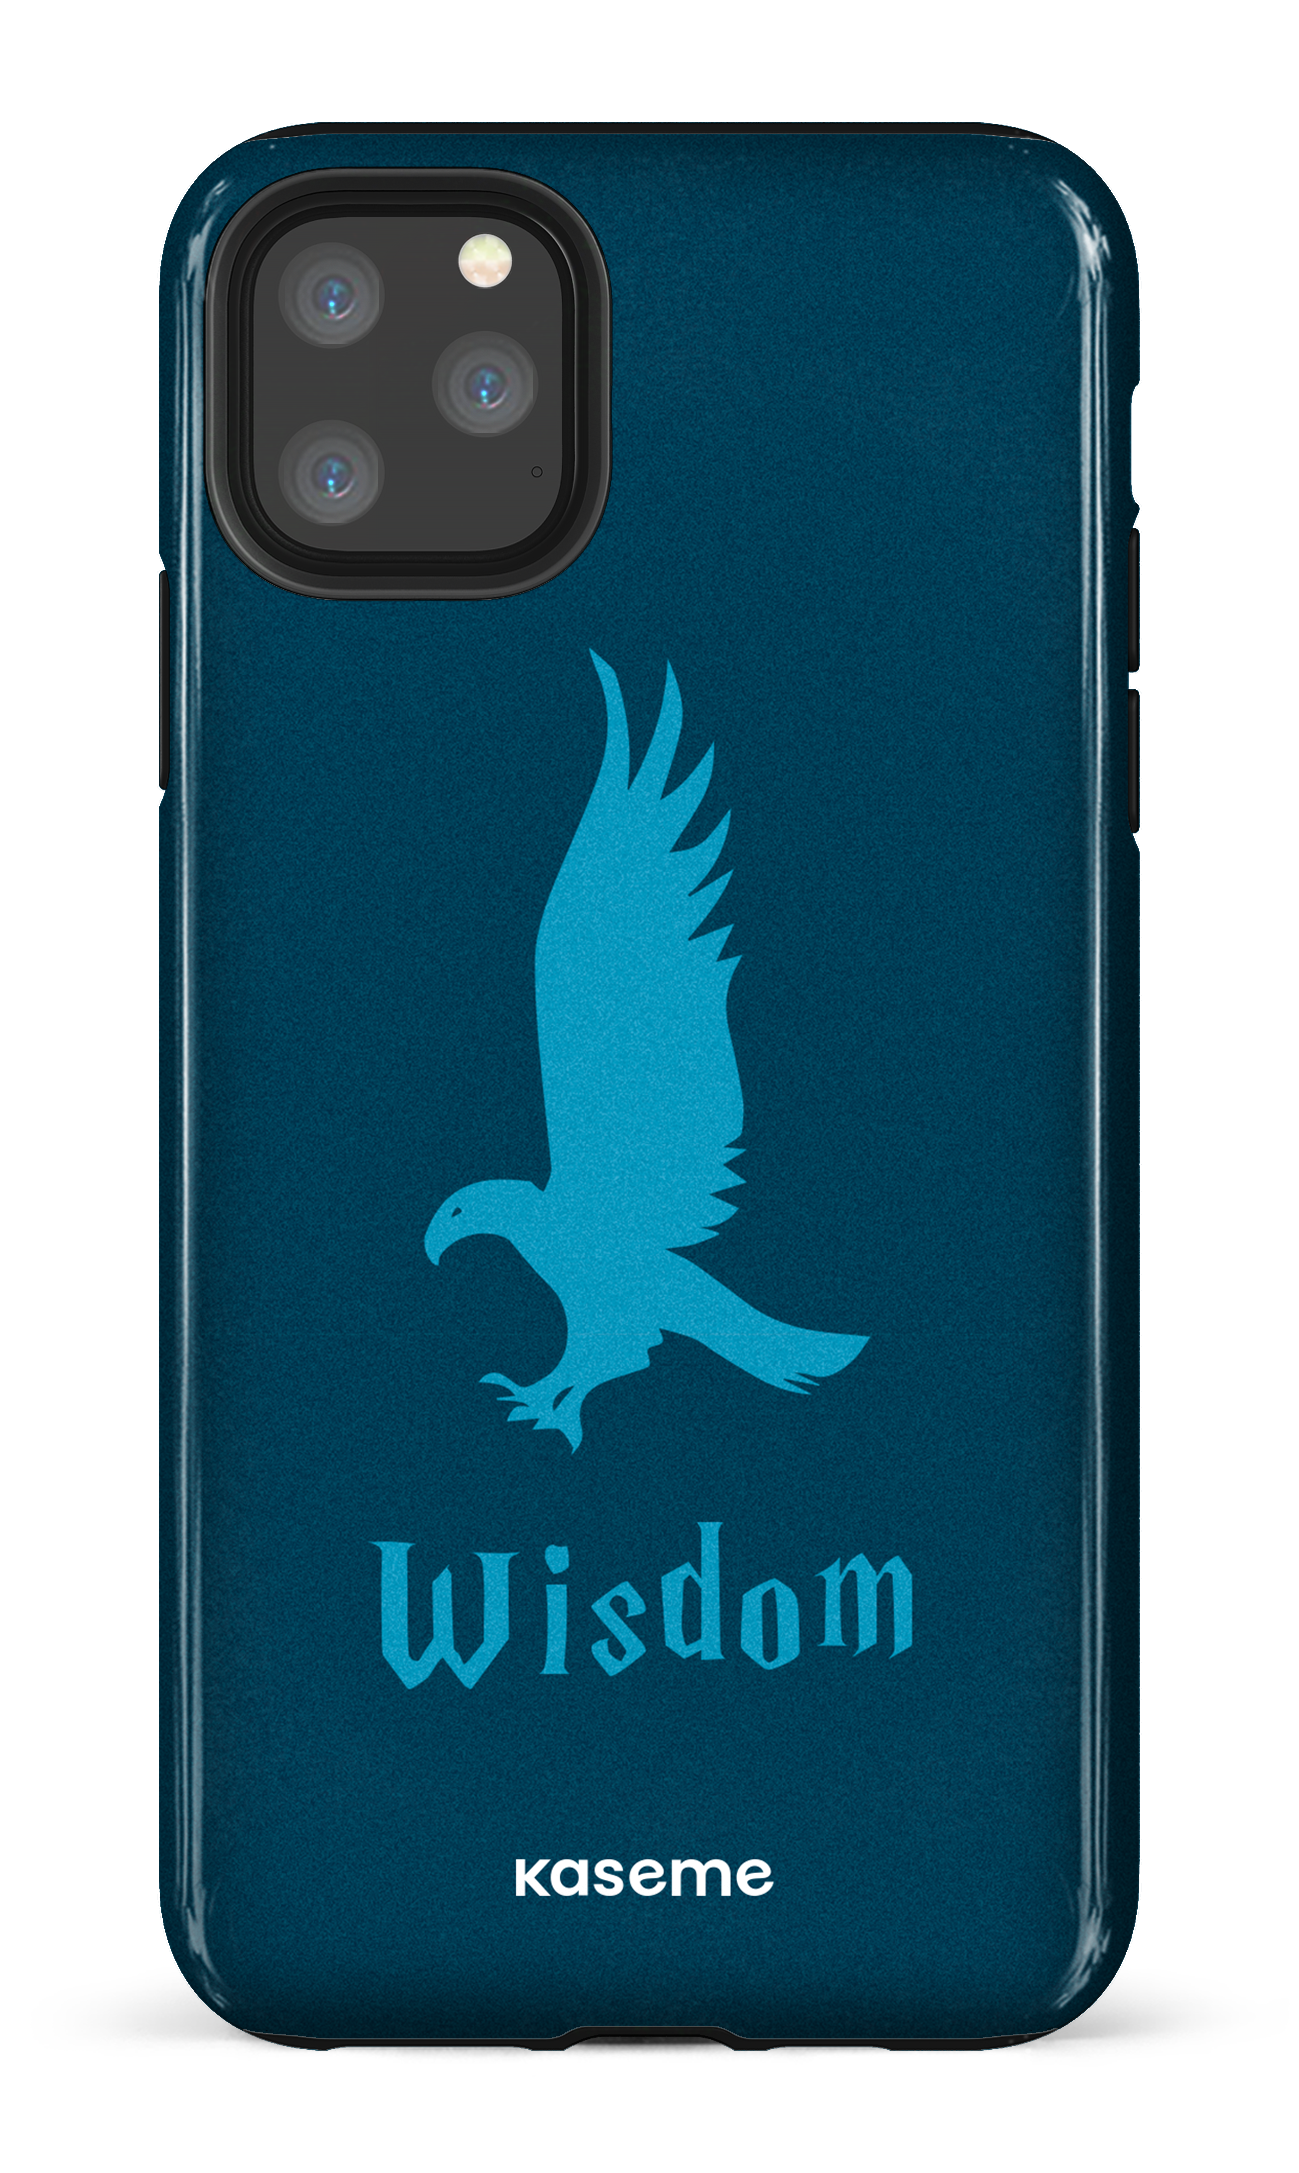 Wisdom - iPhone 11 Pro Max